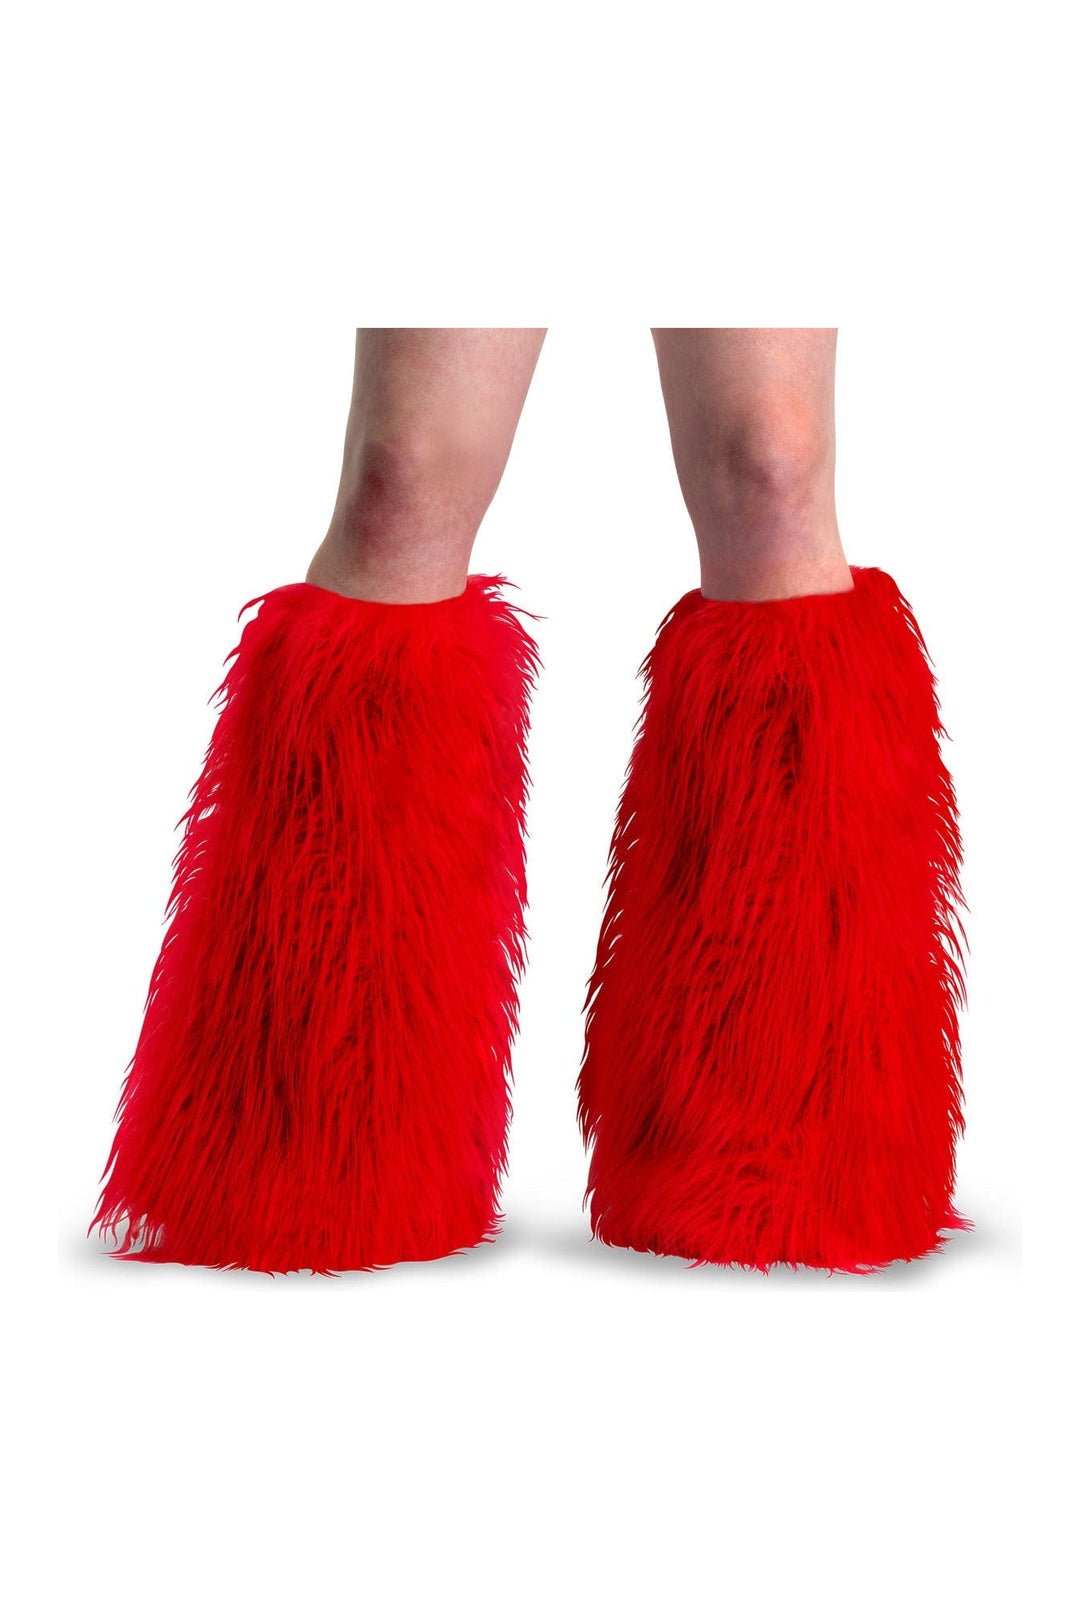 YETI-08 Red Faux Fur Leg Warmers